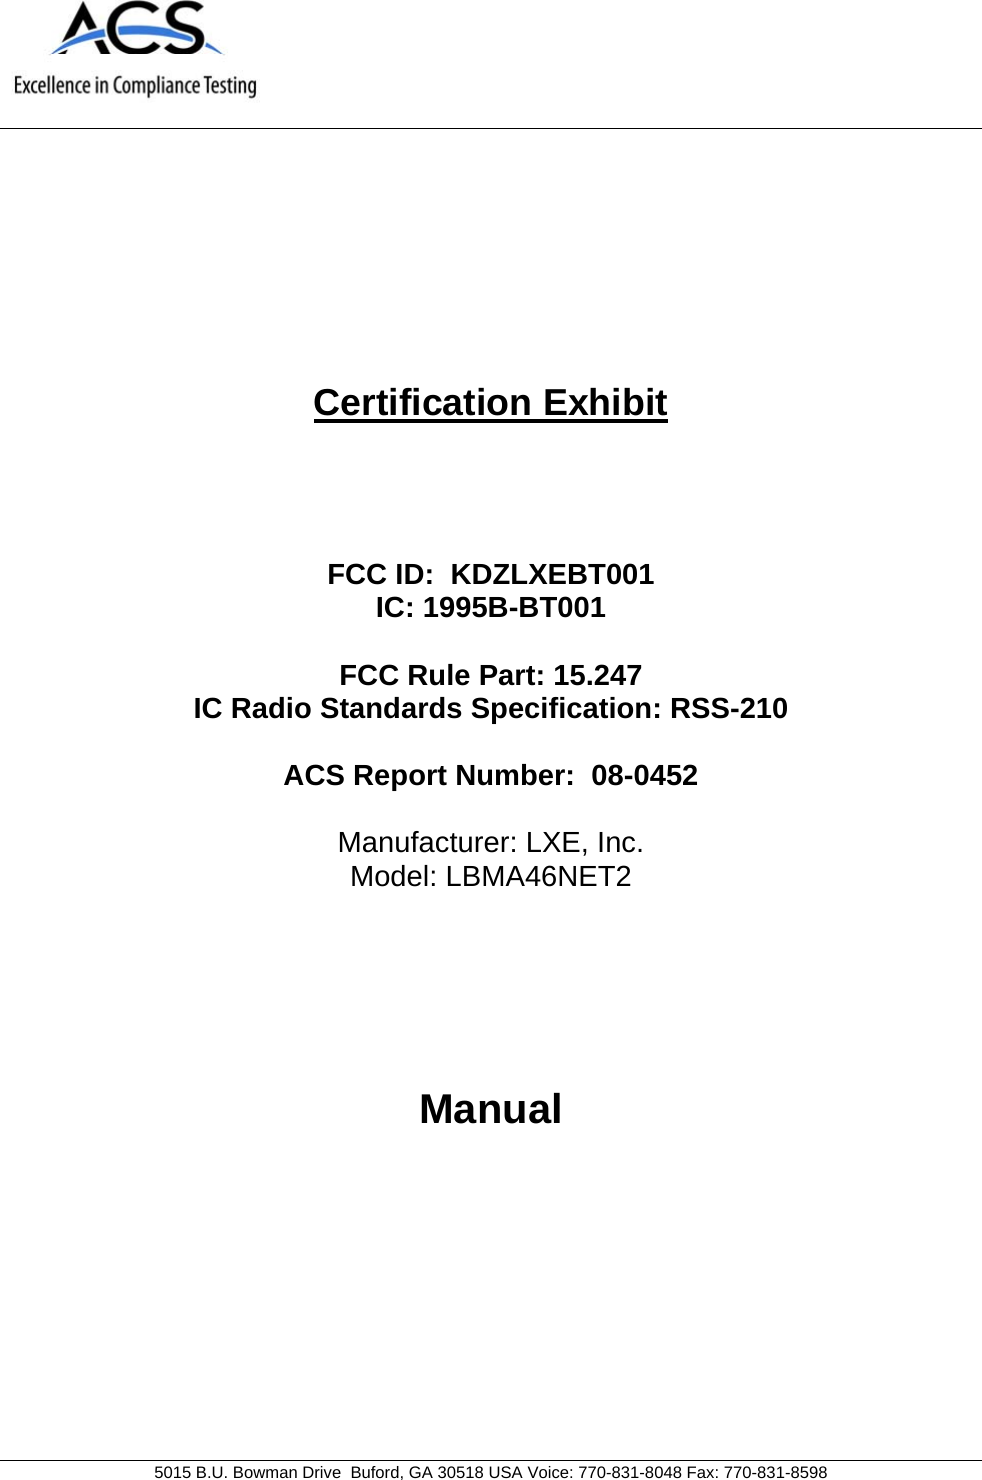         5015 B.U. Bowman Drive  Buford, GA 30518 USA Voice: 770-831-8048 Fax: 770-831-8598 Certification Exhibit     FCC ID:  KDZLXEBT001 IC: 1995B-BT001  FCC Rule Part: 15.247 IC Radio Standards Specification: RSS-210  ACS Report Number:  08-0452   Manufacturer: LXE, Inc. Model: LBMA46NET2     Manual  